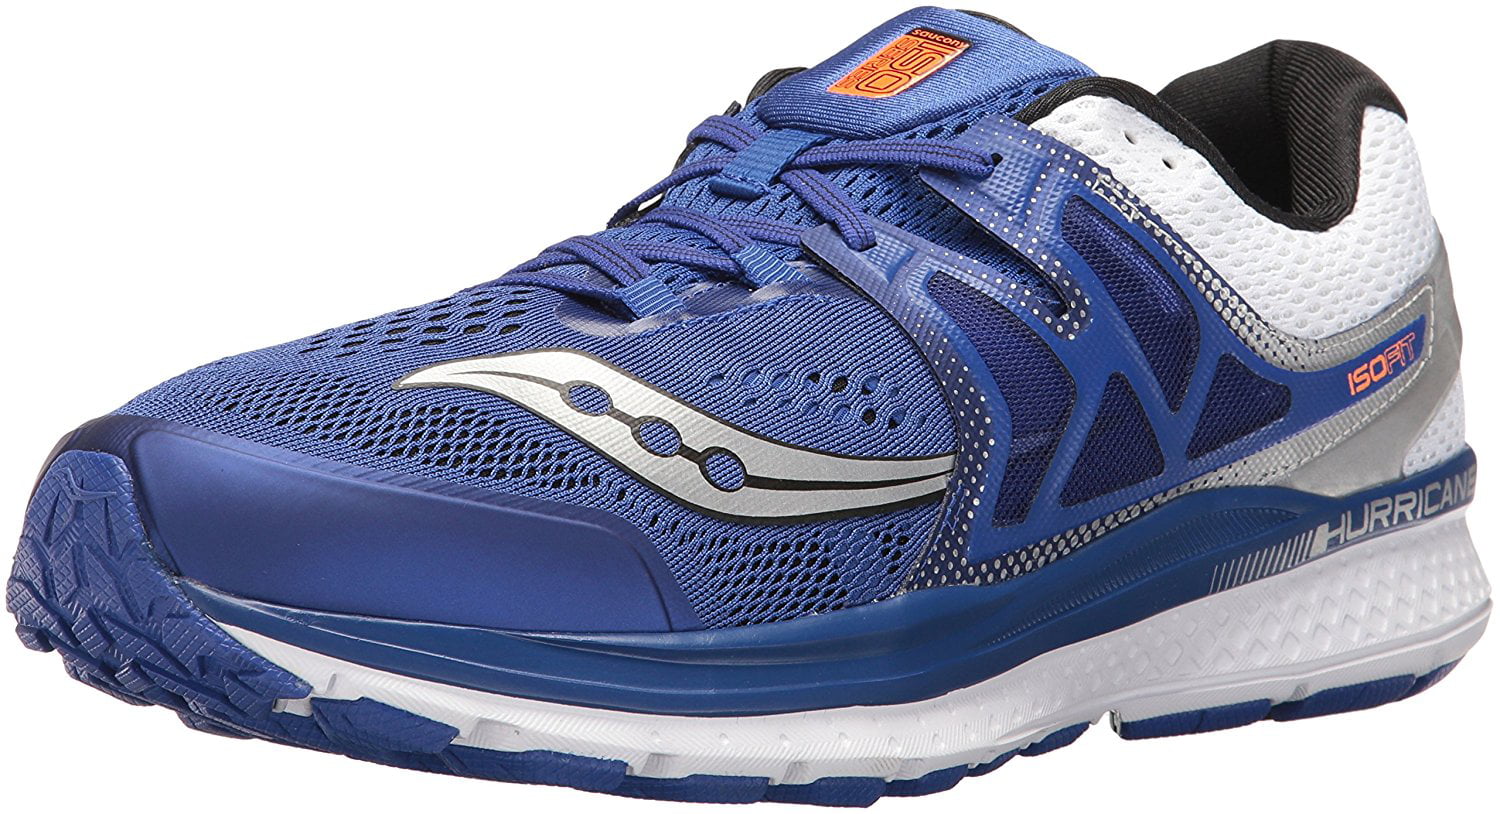 Saucony - Saucony Men's Hurricane ISO 3 Running Shoe, Blue/White, 9 M ...